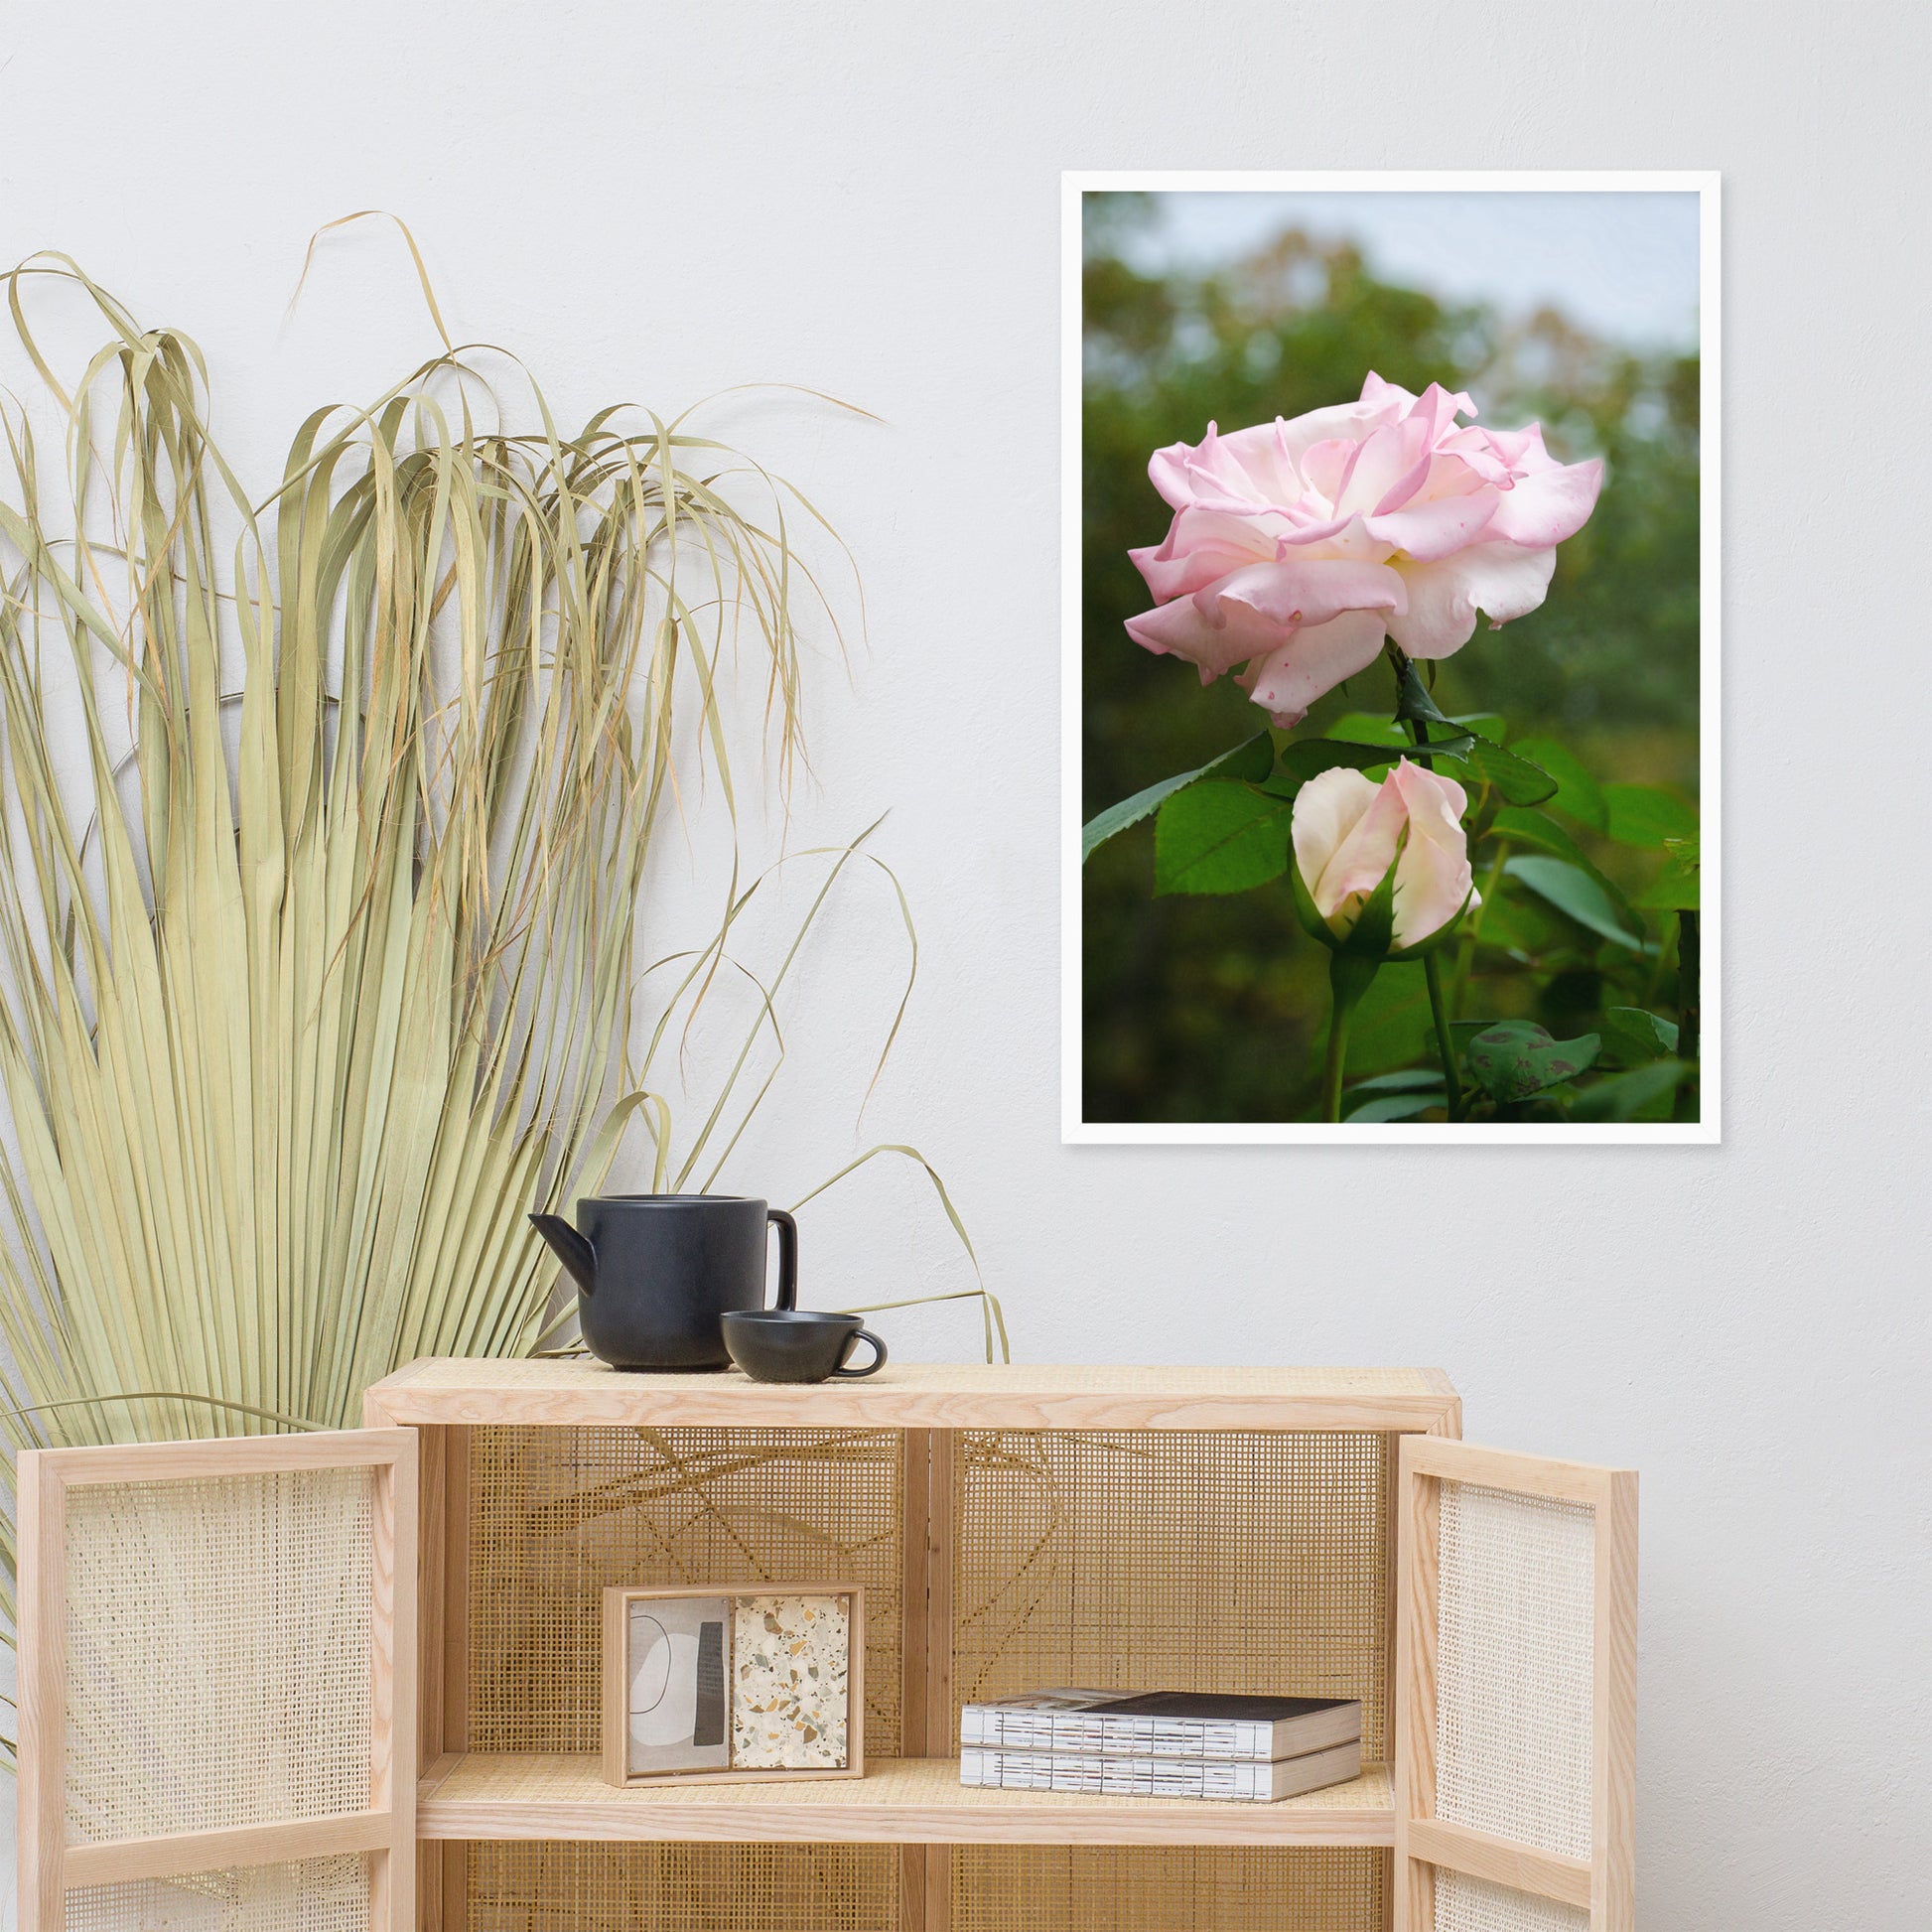 Framed Floral Prints: Admiration - Pink Rose Floral / Botanical / Nature Photo Framed Wall Art Print - Artwork - Wall Decor - Home Decor